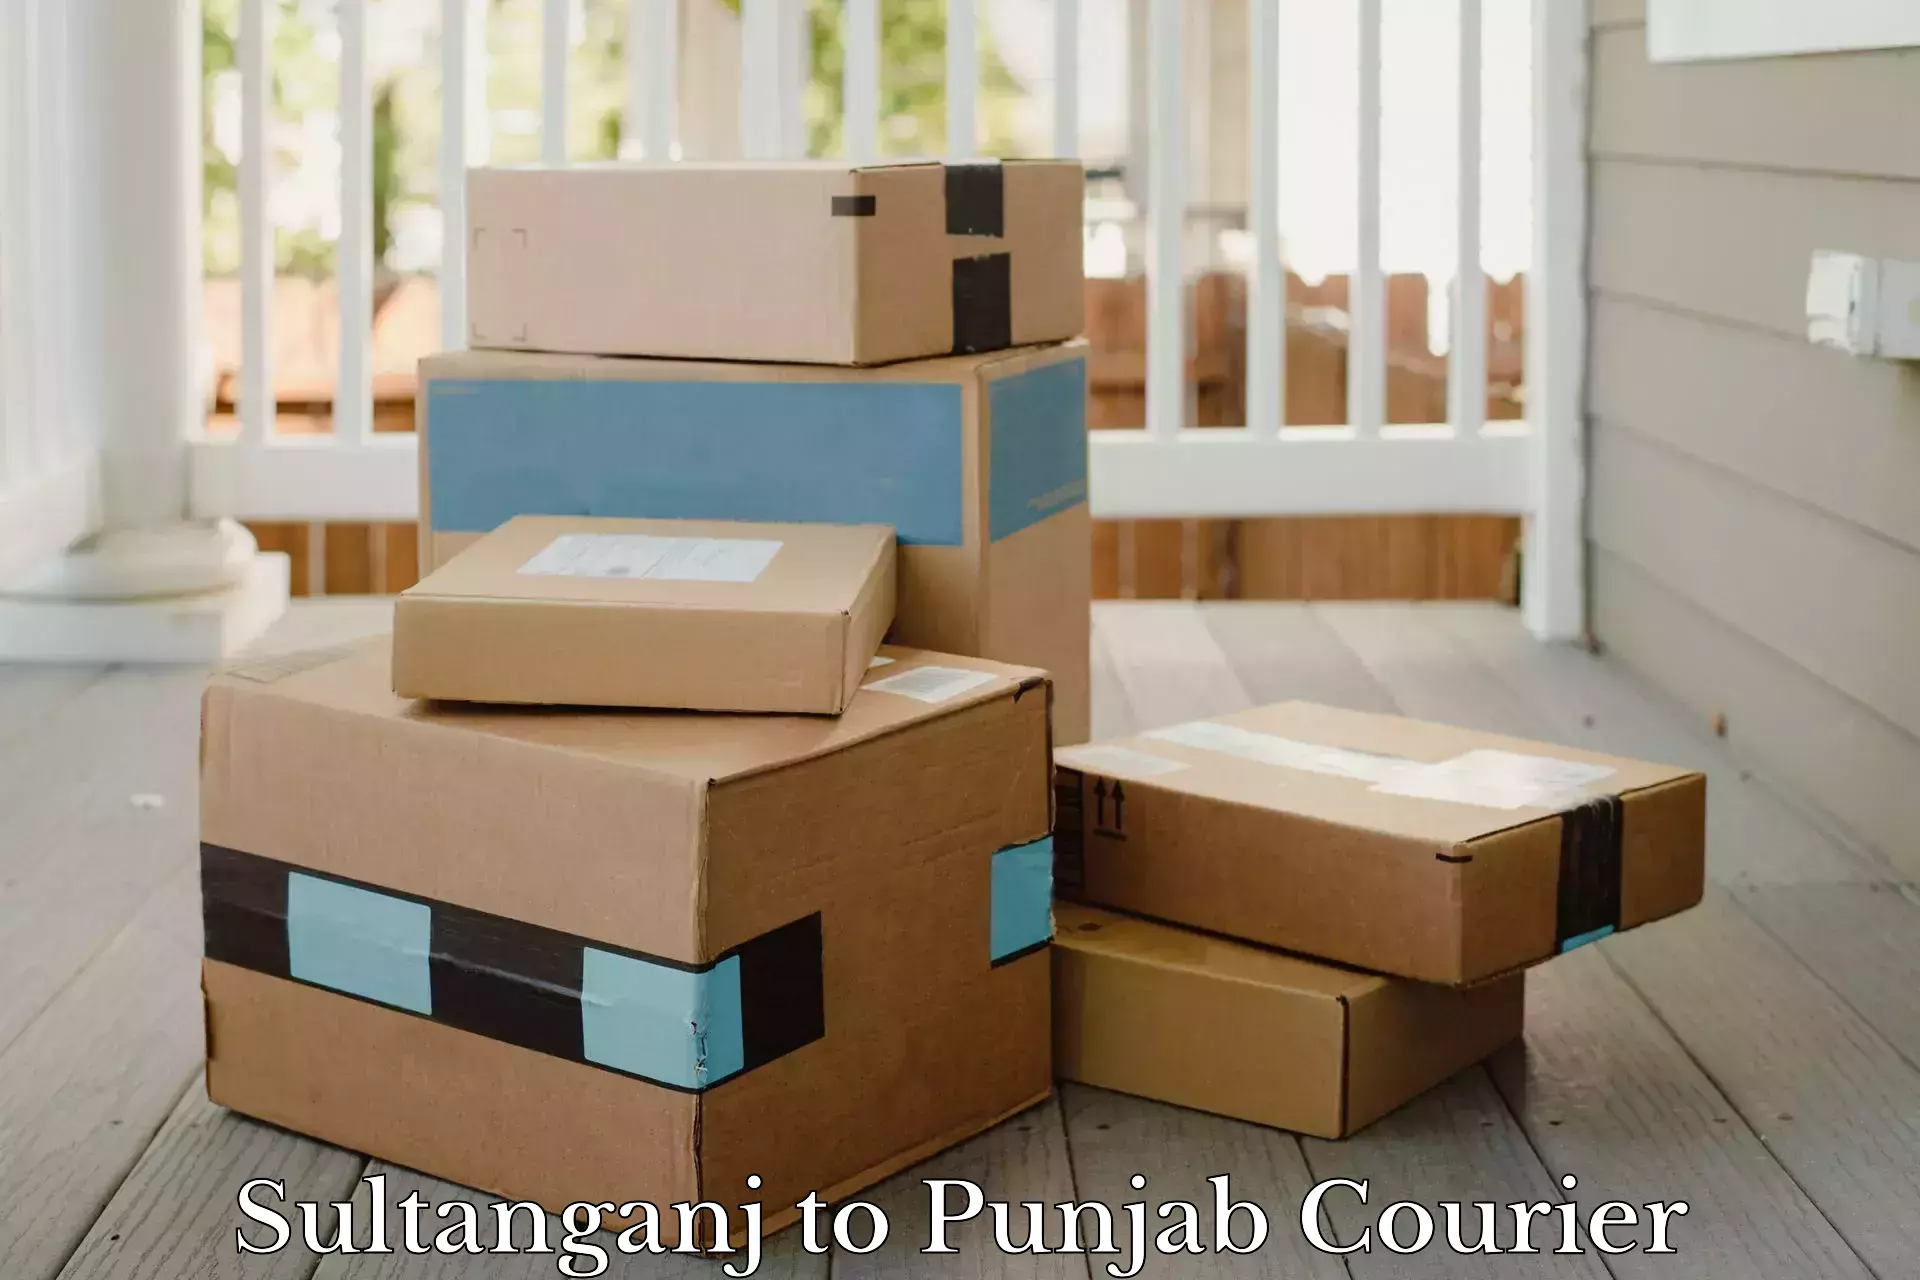 Supply chain efficiency Sultanganj to Punjab